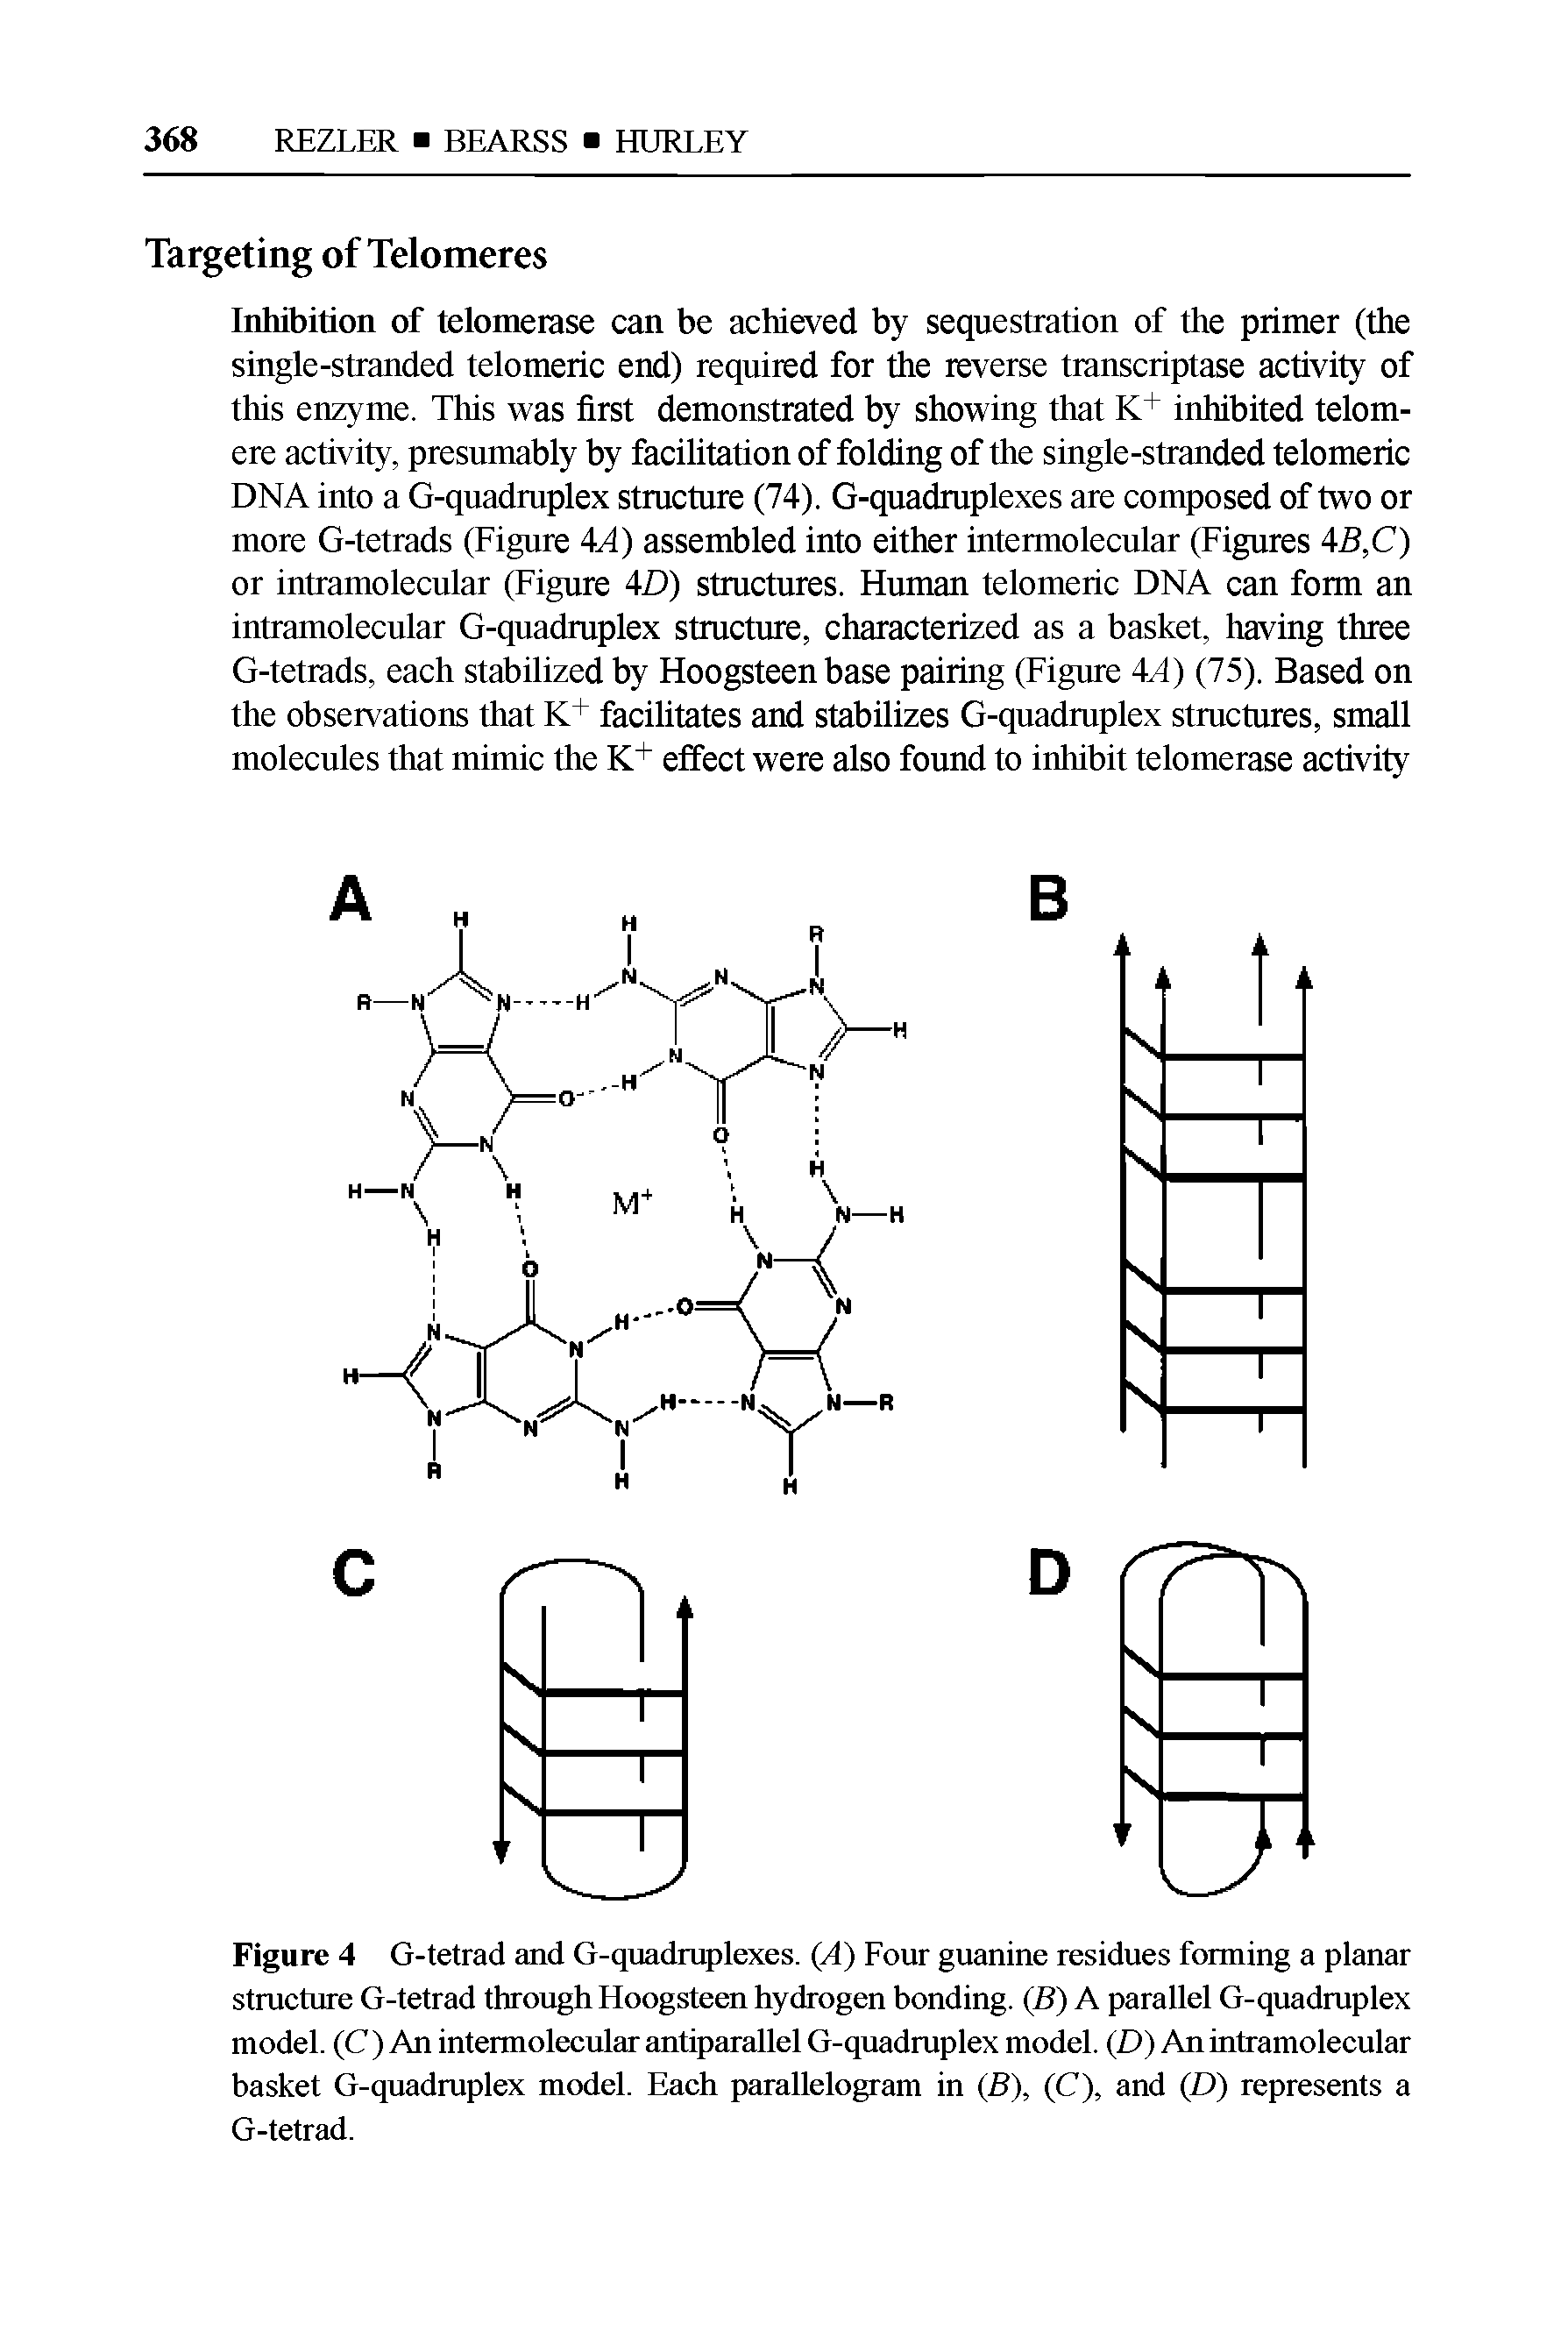 Figure 4 G-tetrad and G-quadruplexes. (A) Four guanine residues forming a planar structure G-tetrad through Hoogsteen hydrogen bonding. (B) A parallel G-quadruplex model. (C ) An intermolecular antiparallel G-quadruplex model. (D) An intramolecular basket G-quadruplex model. Each parallelogram in (B), (C), and (/>) represents a G-tetrad.